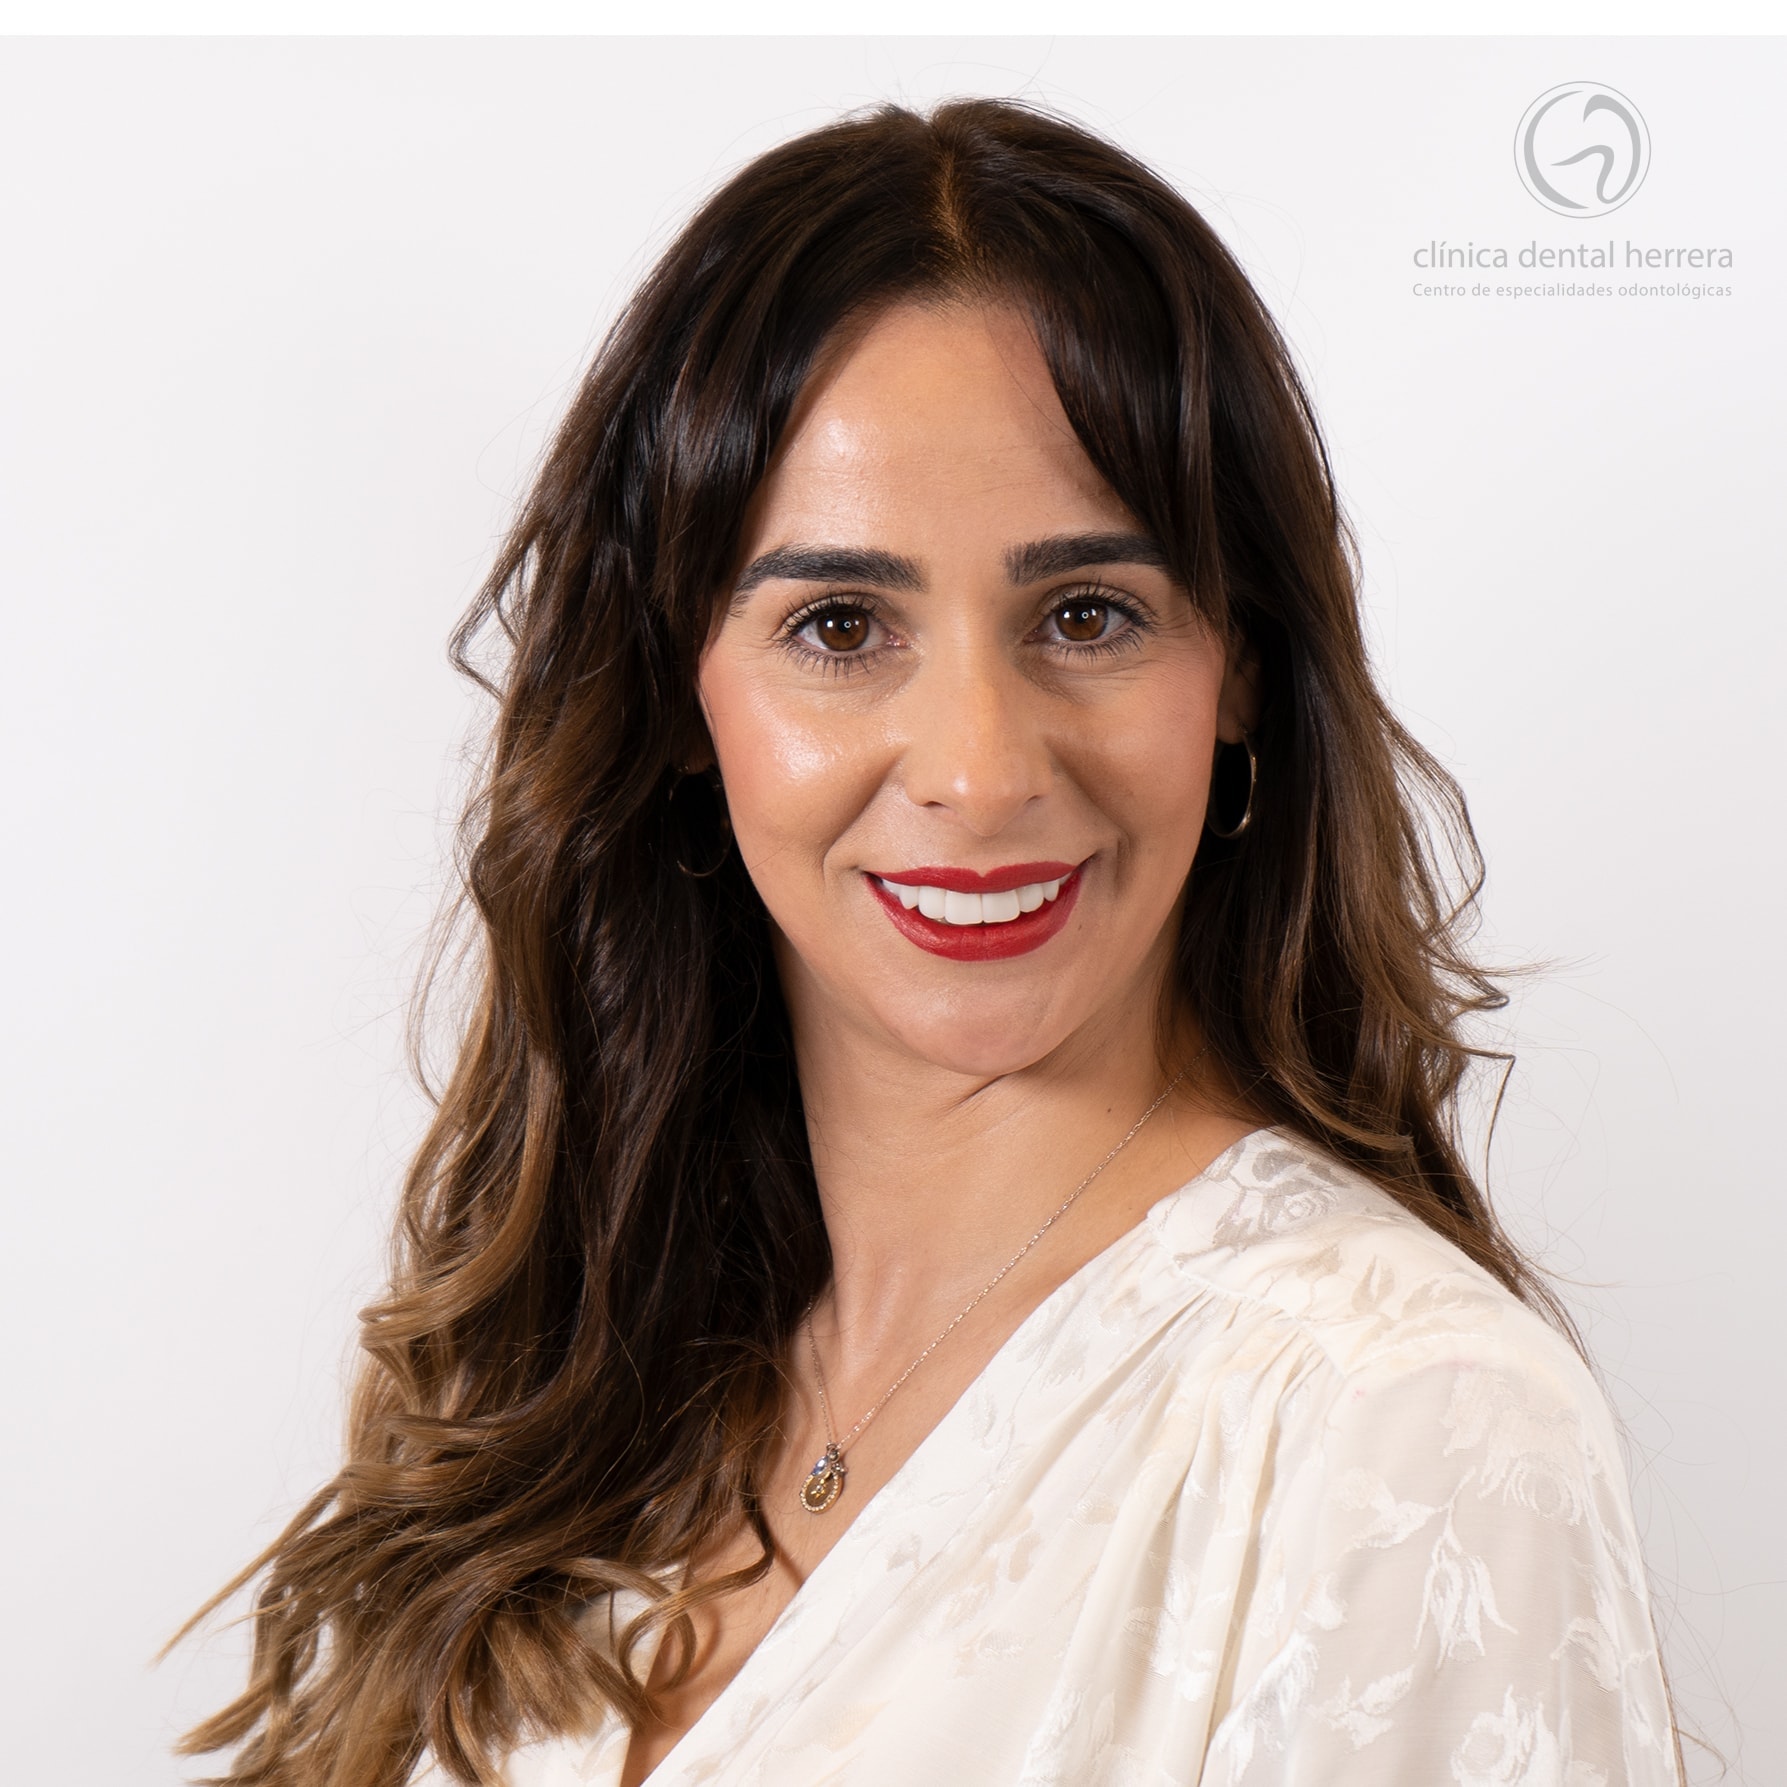 Macarena Pastor Ruiz. Orthodontie, Implants et Facettes Dentaires 6